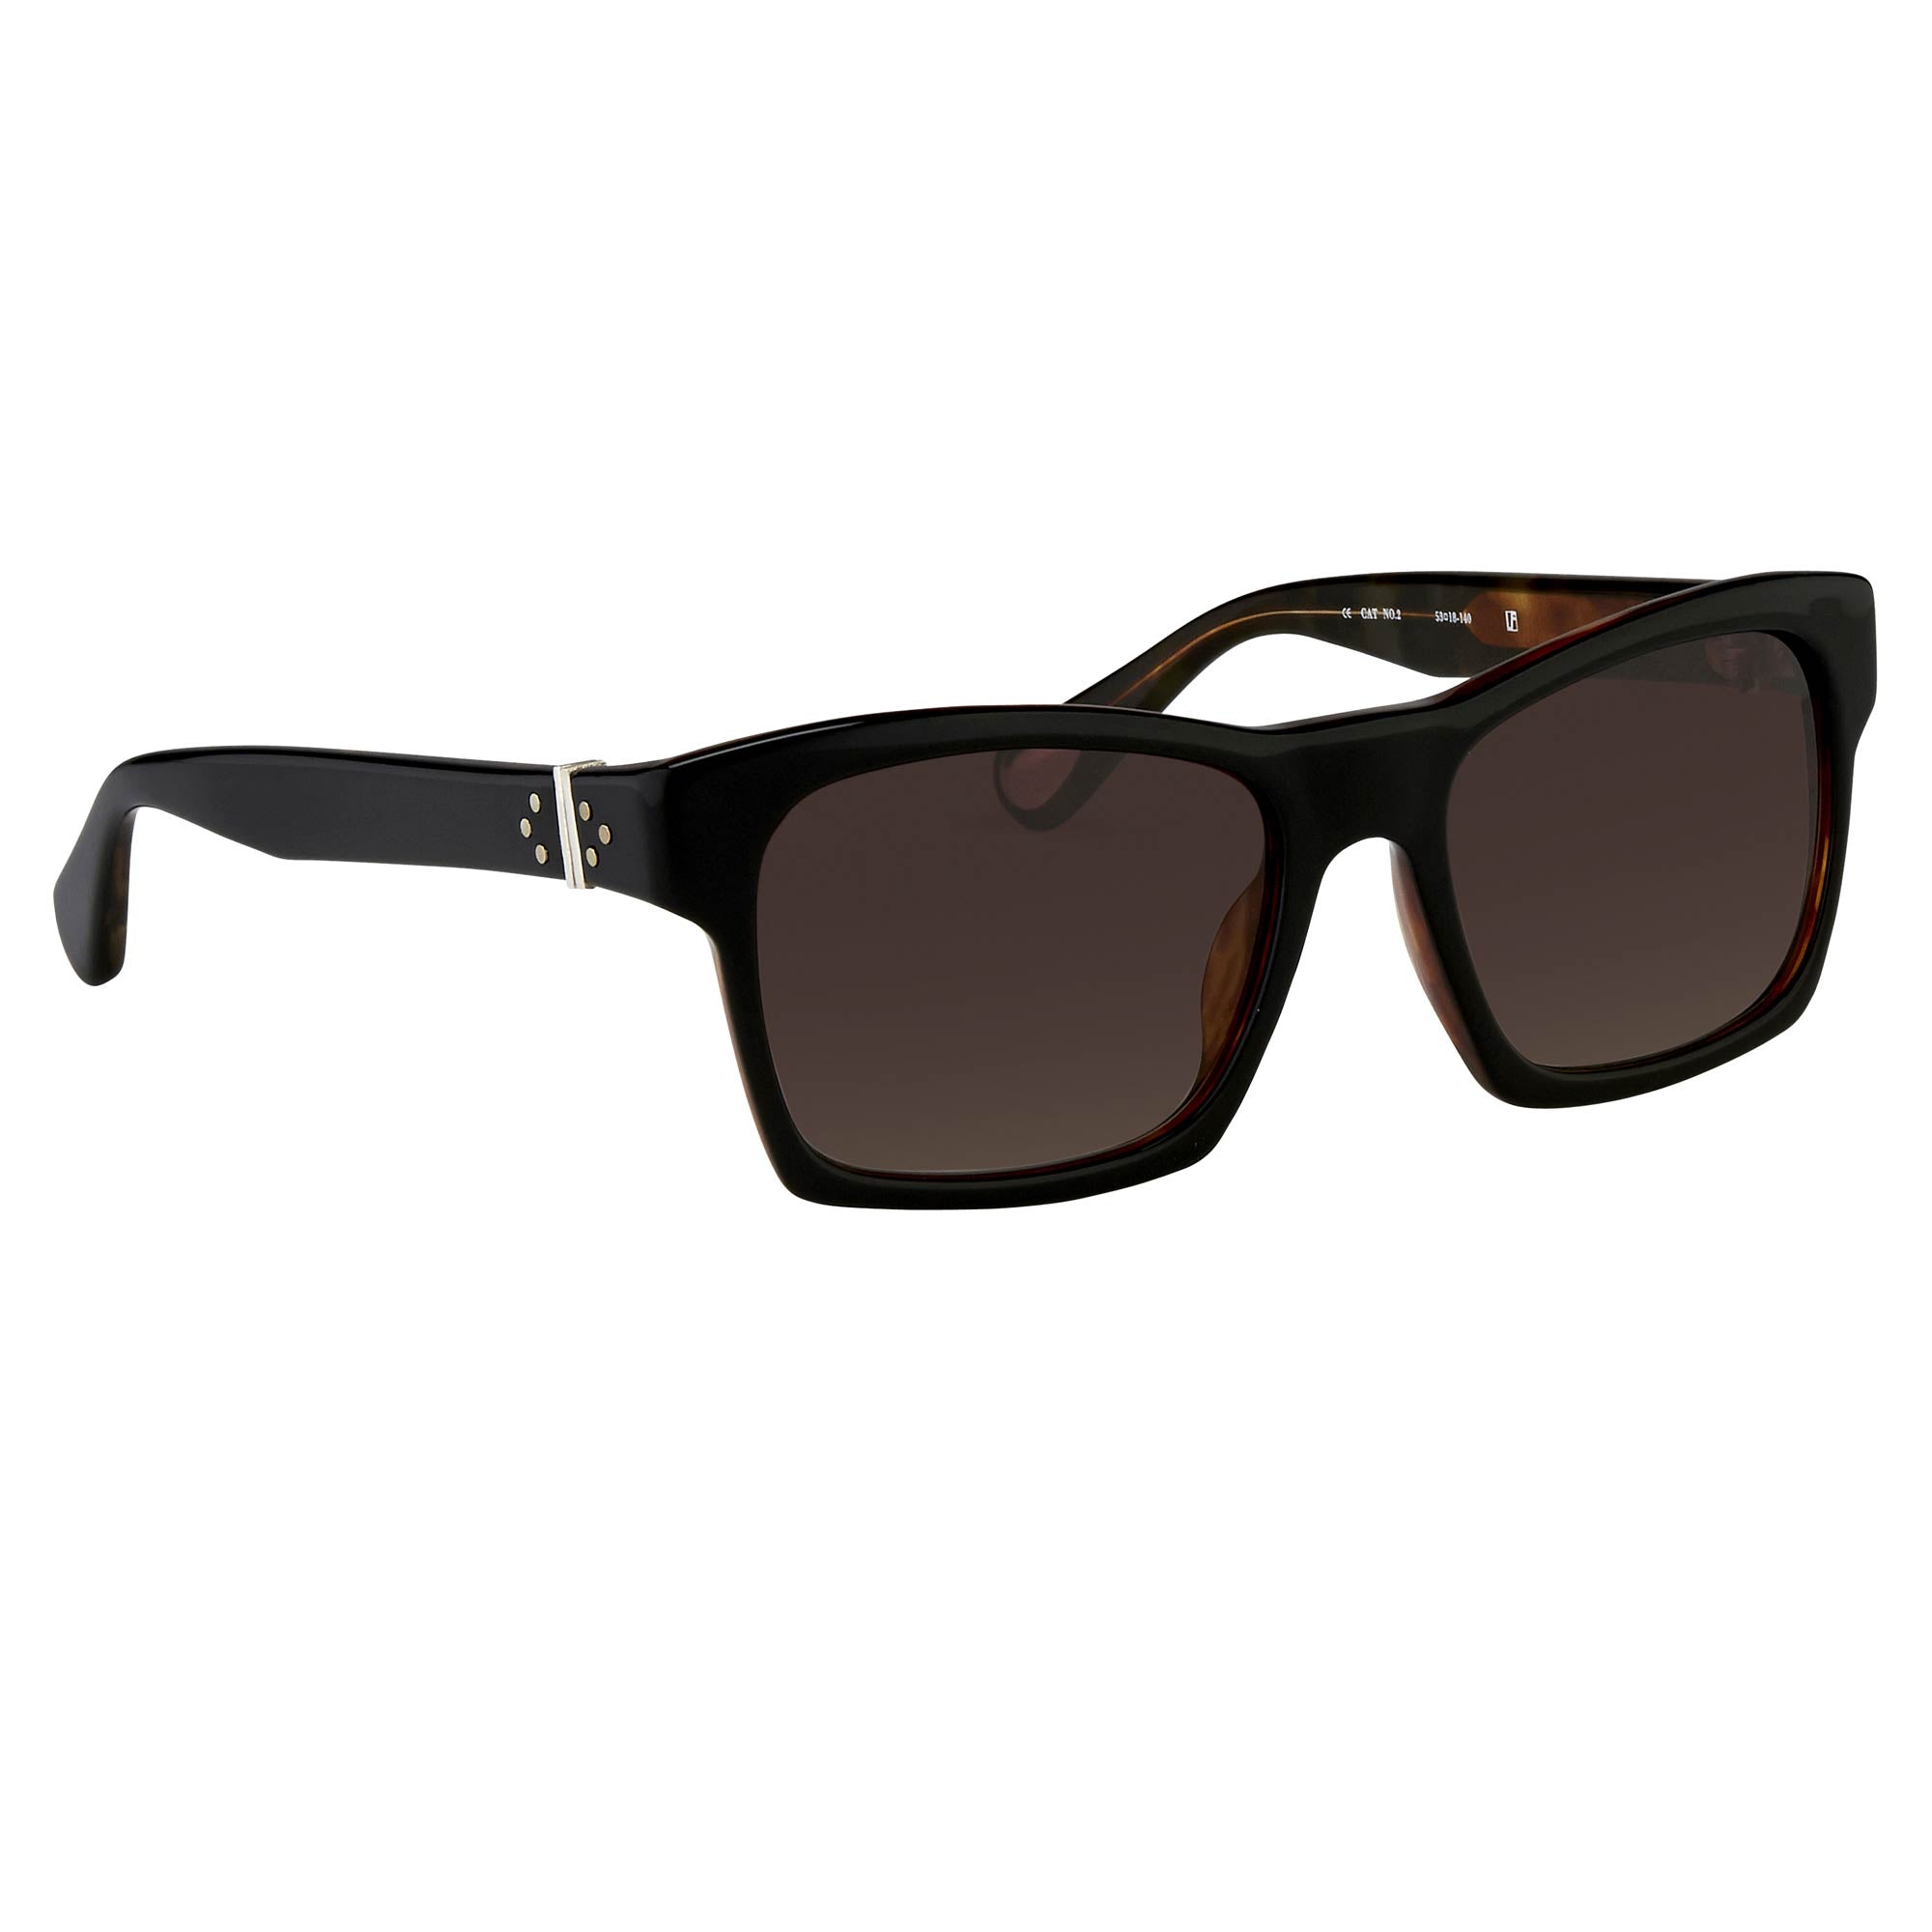 Ann Demeulemeester Sunglasses D-Frame Black Tortoise Shell Tone and Brown